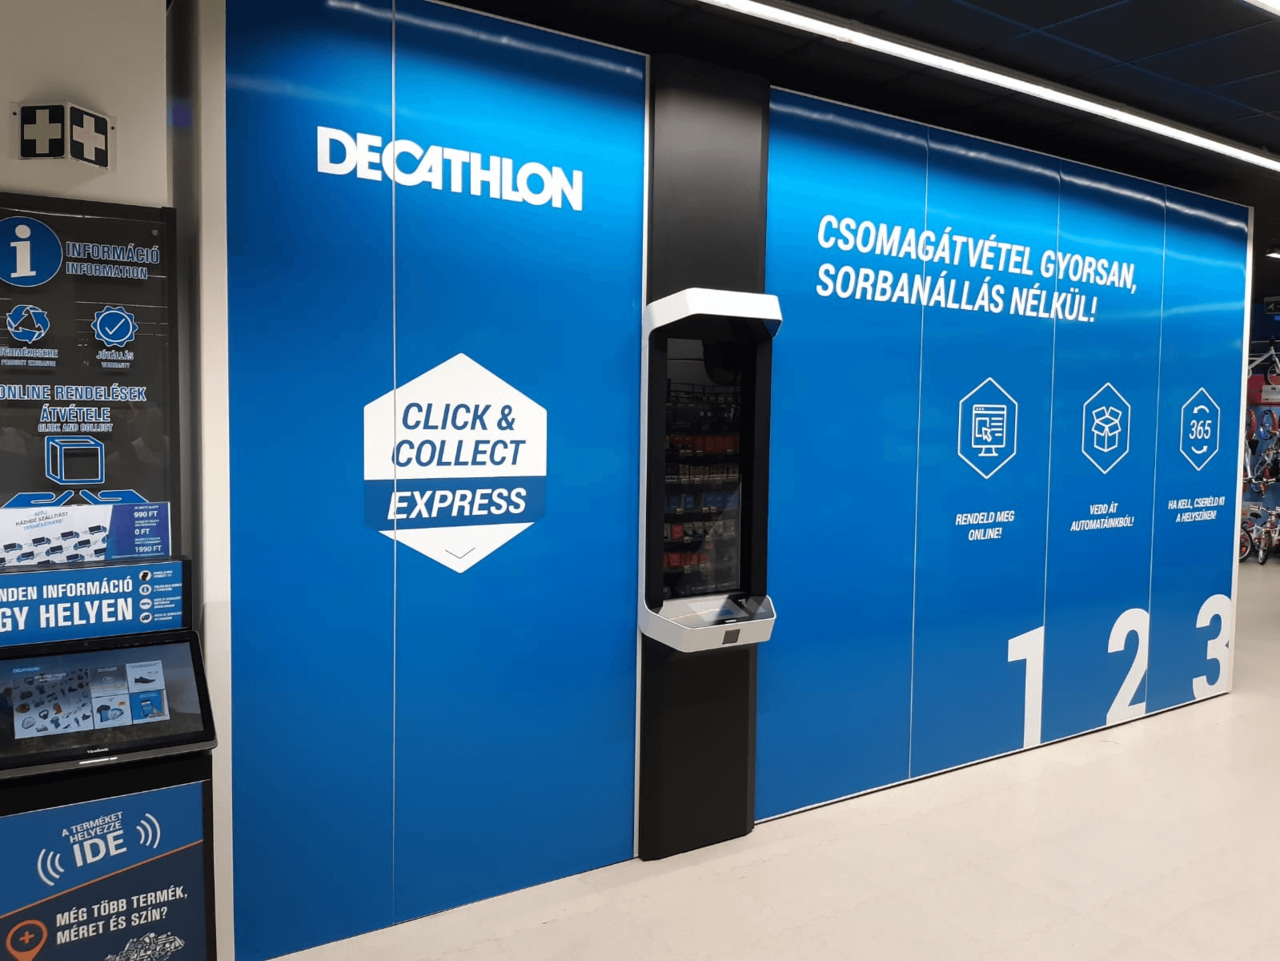 decathlon collection